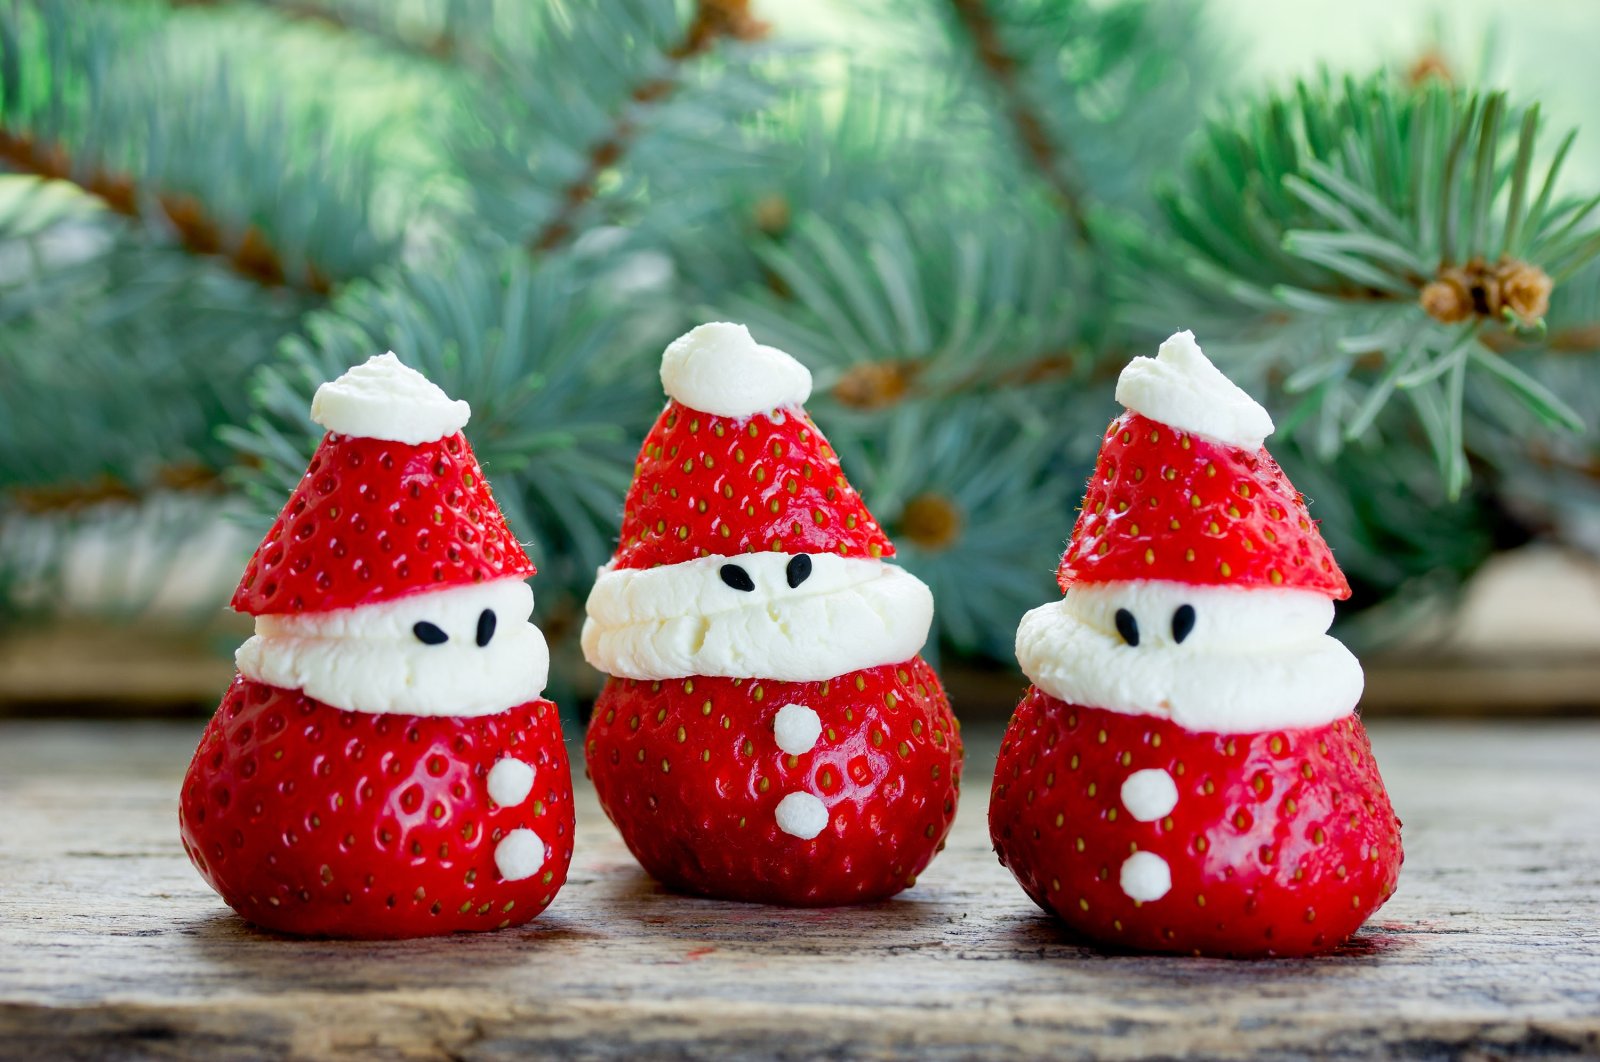 A strawberry Santa Claus. (Shutterstock Photo)